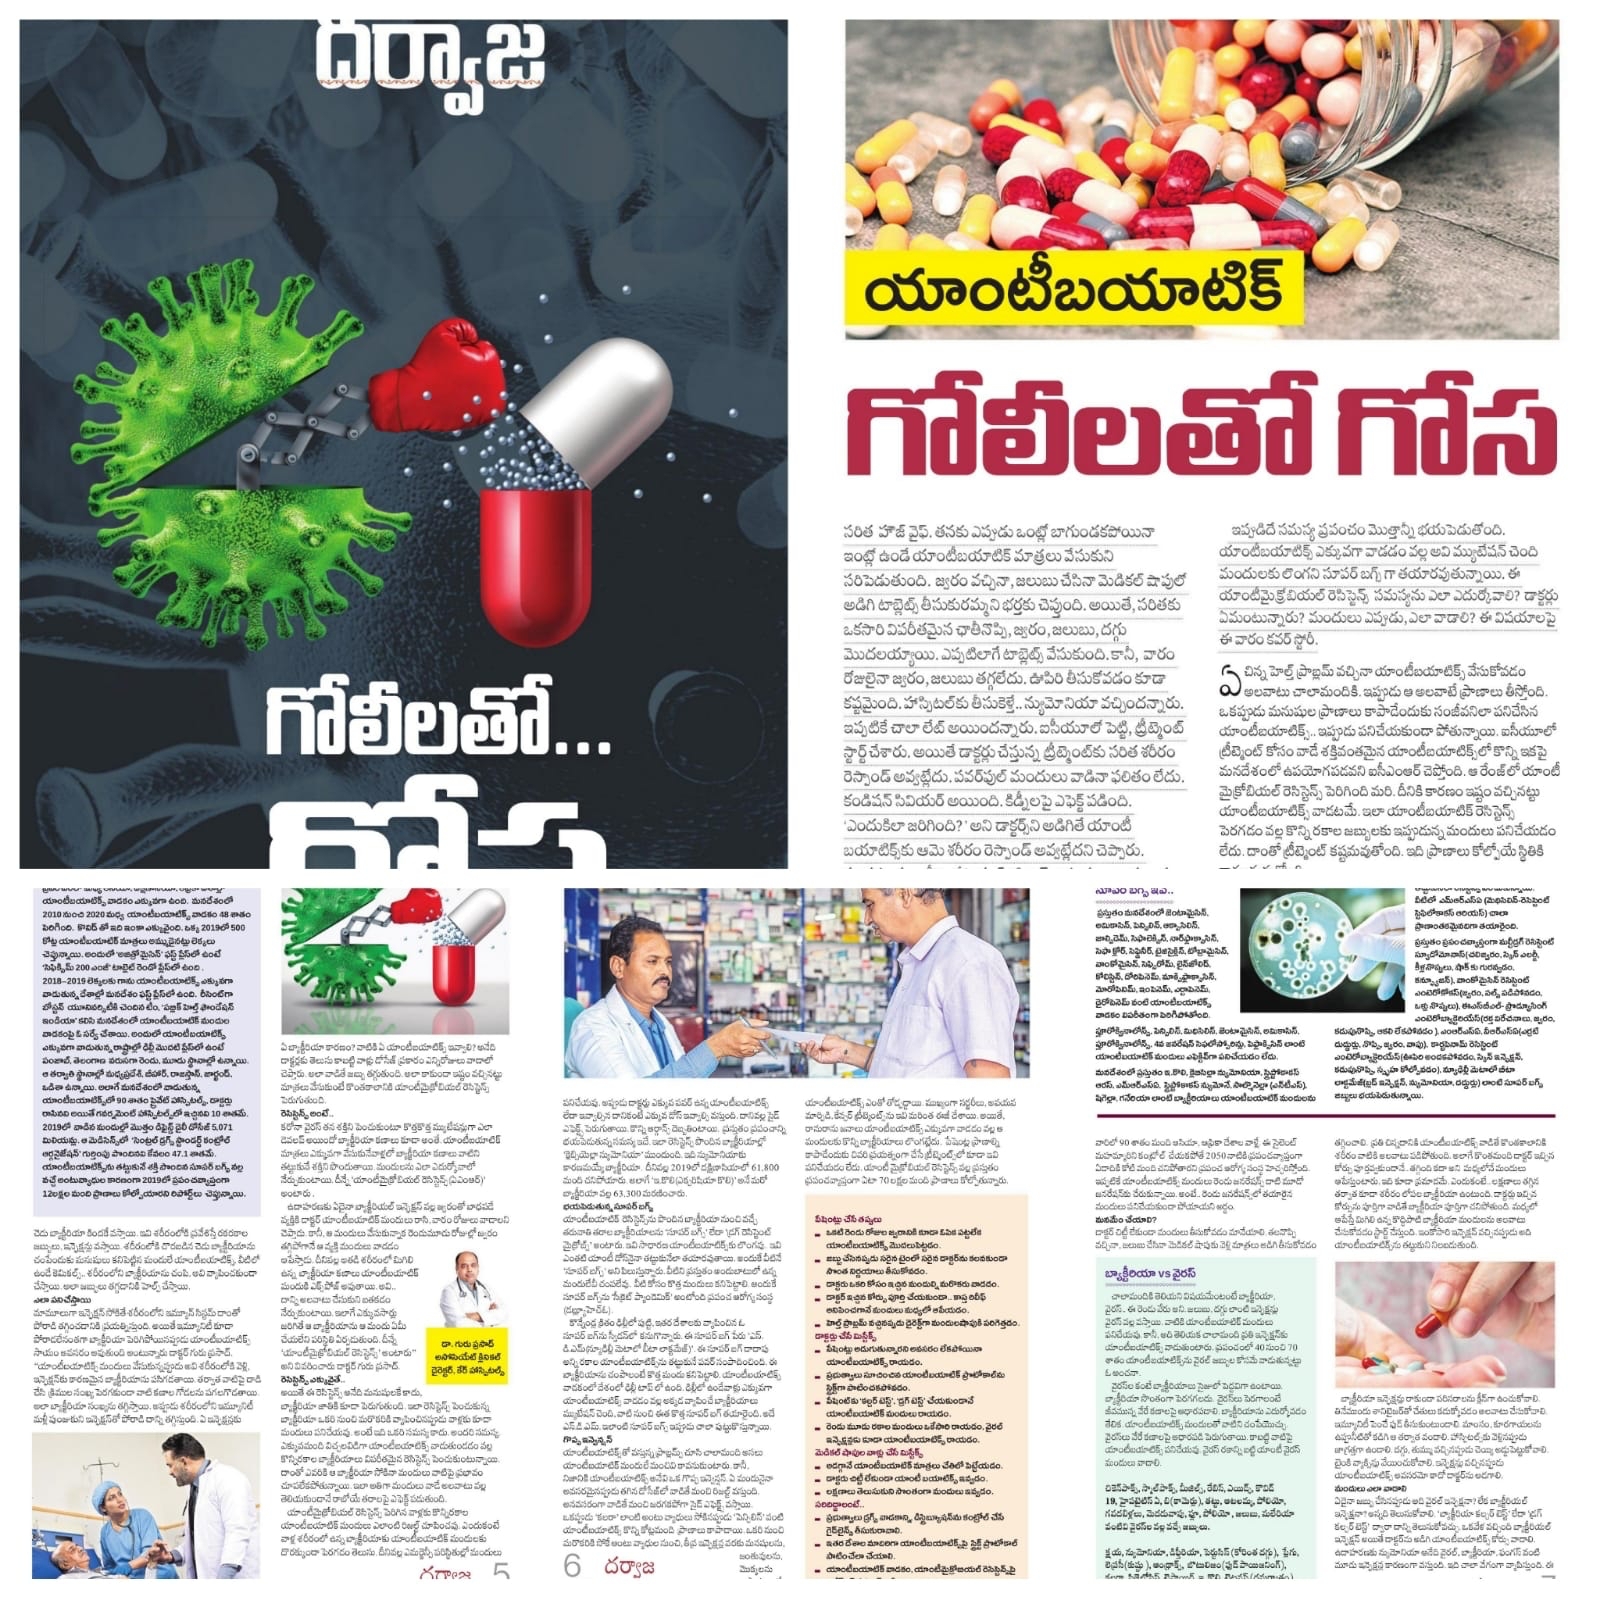 Cover Story on Antibiotic Resistance by Dr. H Guru Prasad, HOD of Internal Medicine, CARE Hospitals, Banjara hills